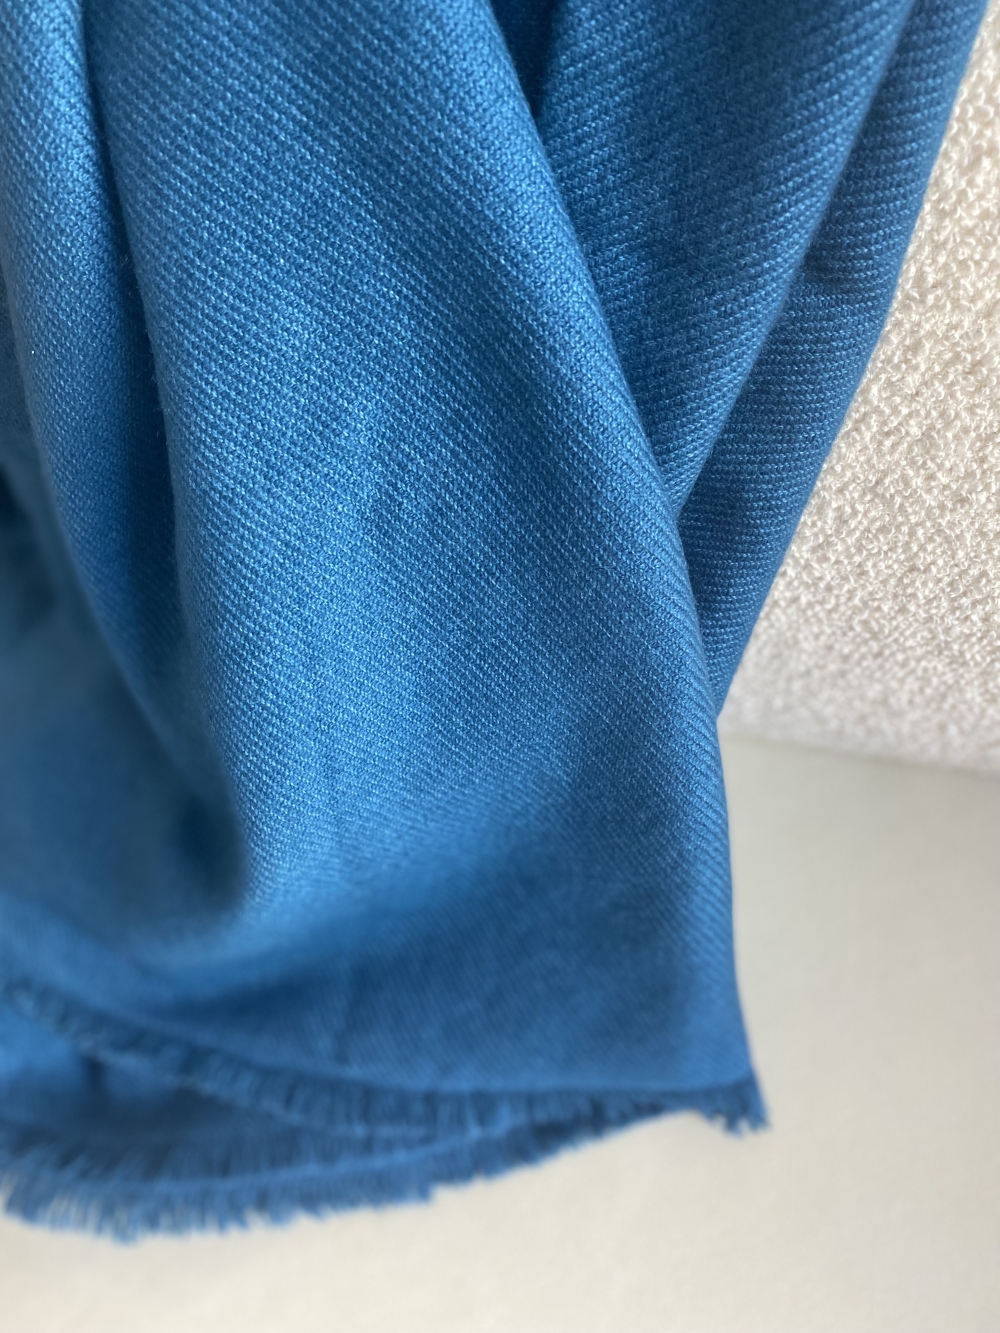 Cashmere accessories blanket toodoo plain s 140 x 200 canard blue 140 x 200 cm